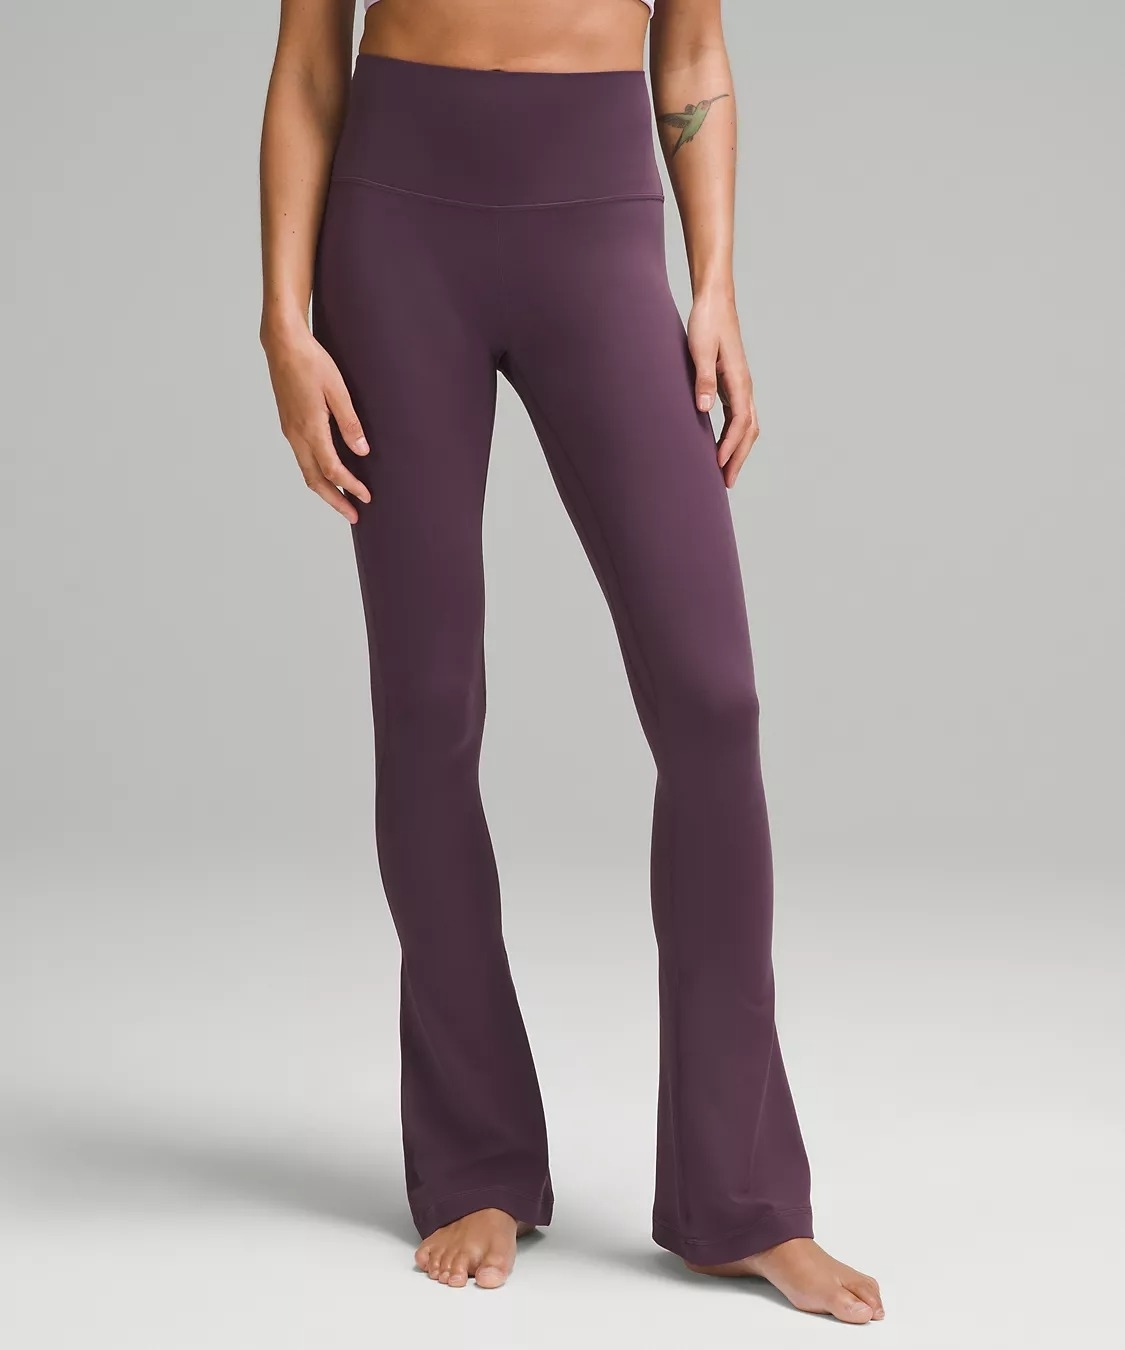 model wearing flared purple high-rise leggings